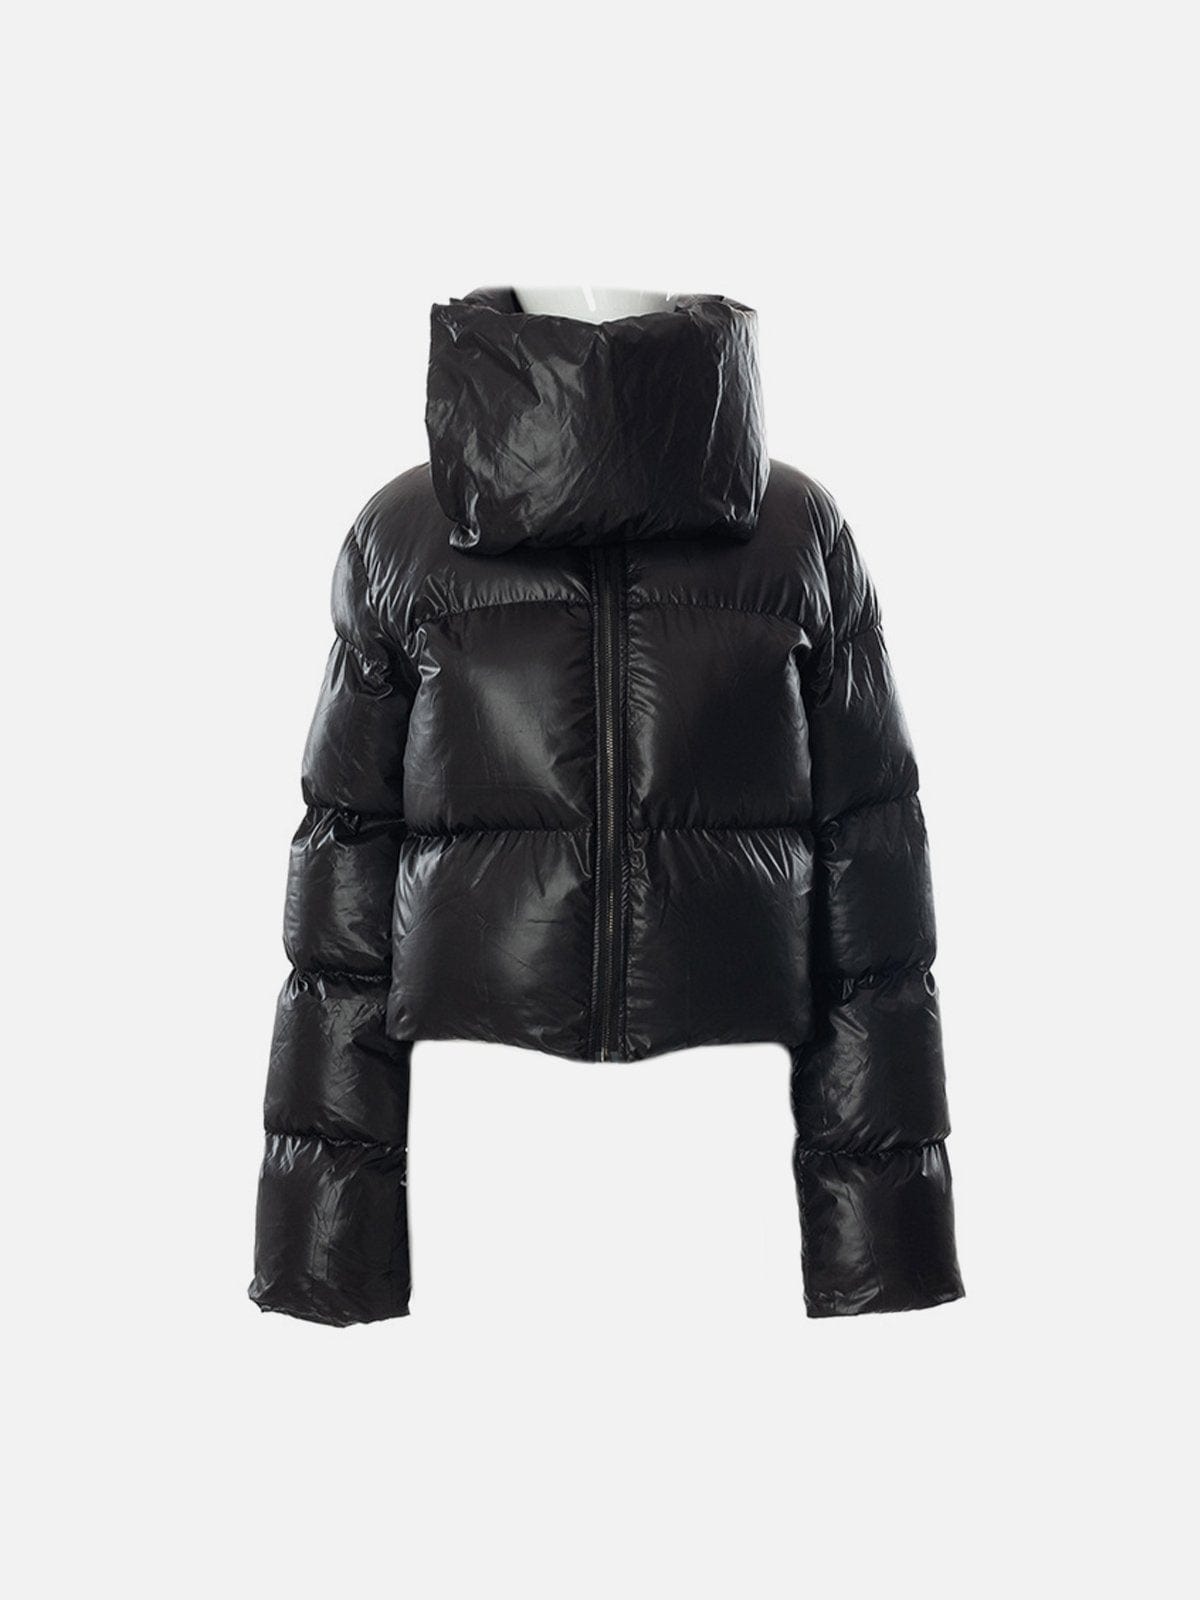 Buttons Scarf Winter Coat Streetwear Brand Techwear Combat Tactical YUGEN THEORY